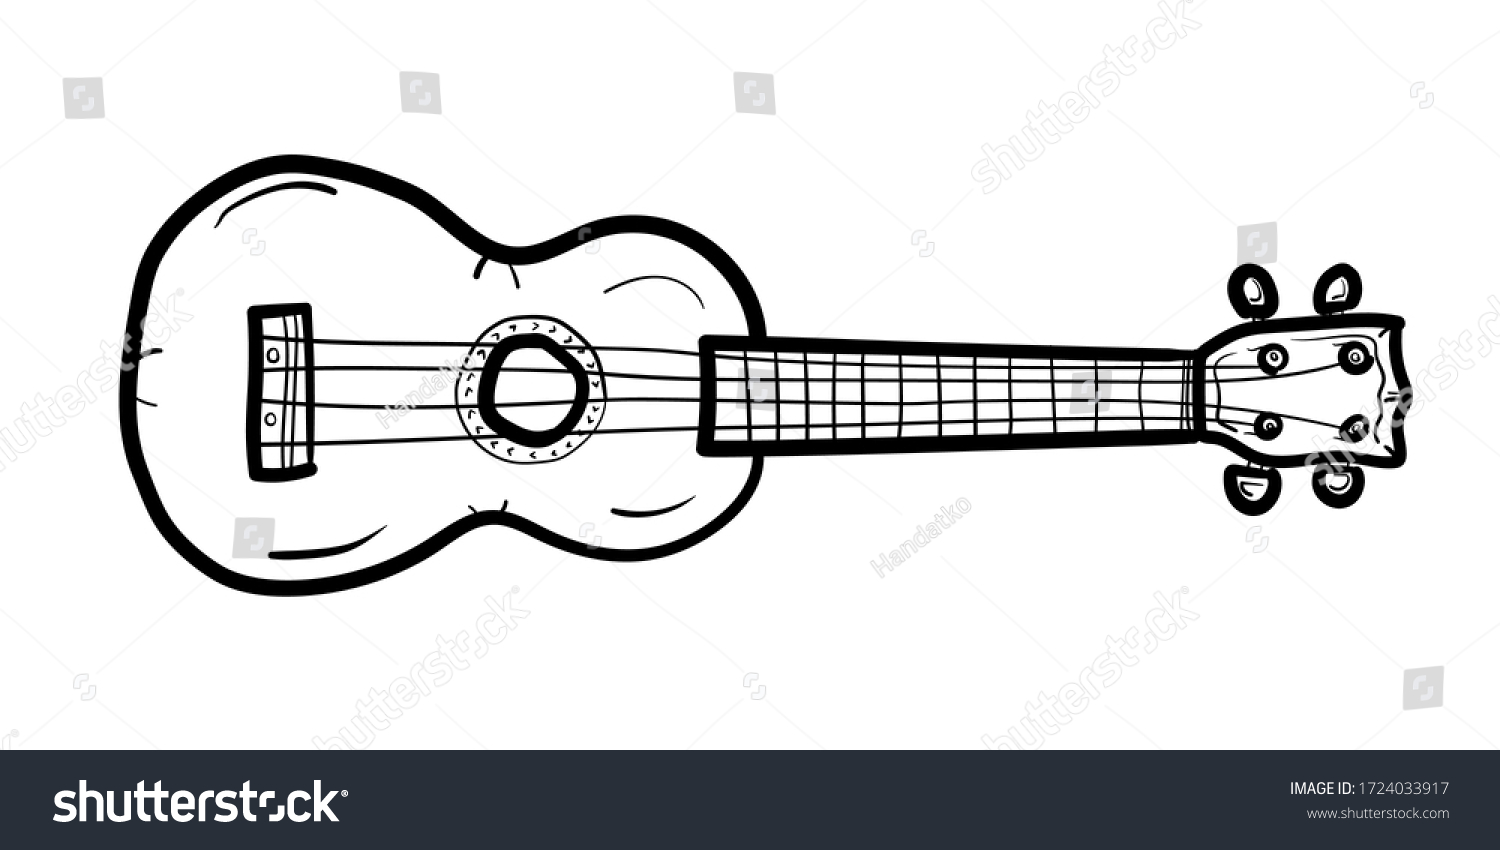 Ukulele Bass Guitar Outline Vector Illustration: เวกเตอร์สต็อก (ปลอดค่า